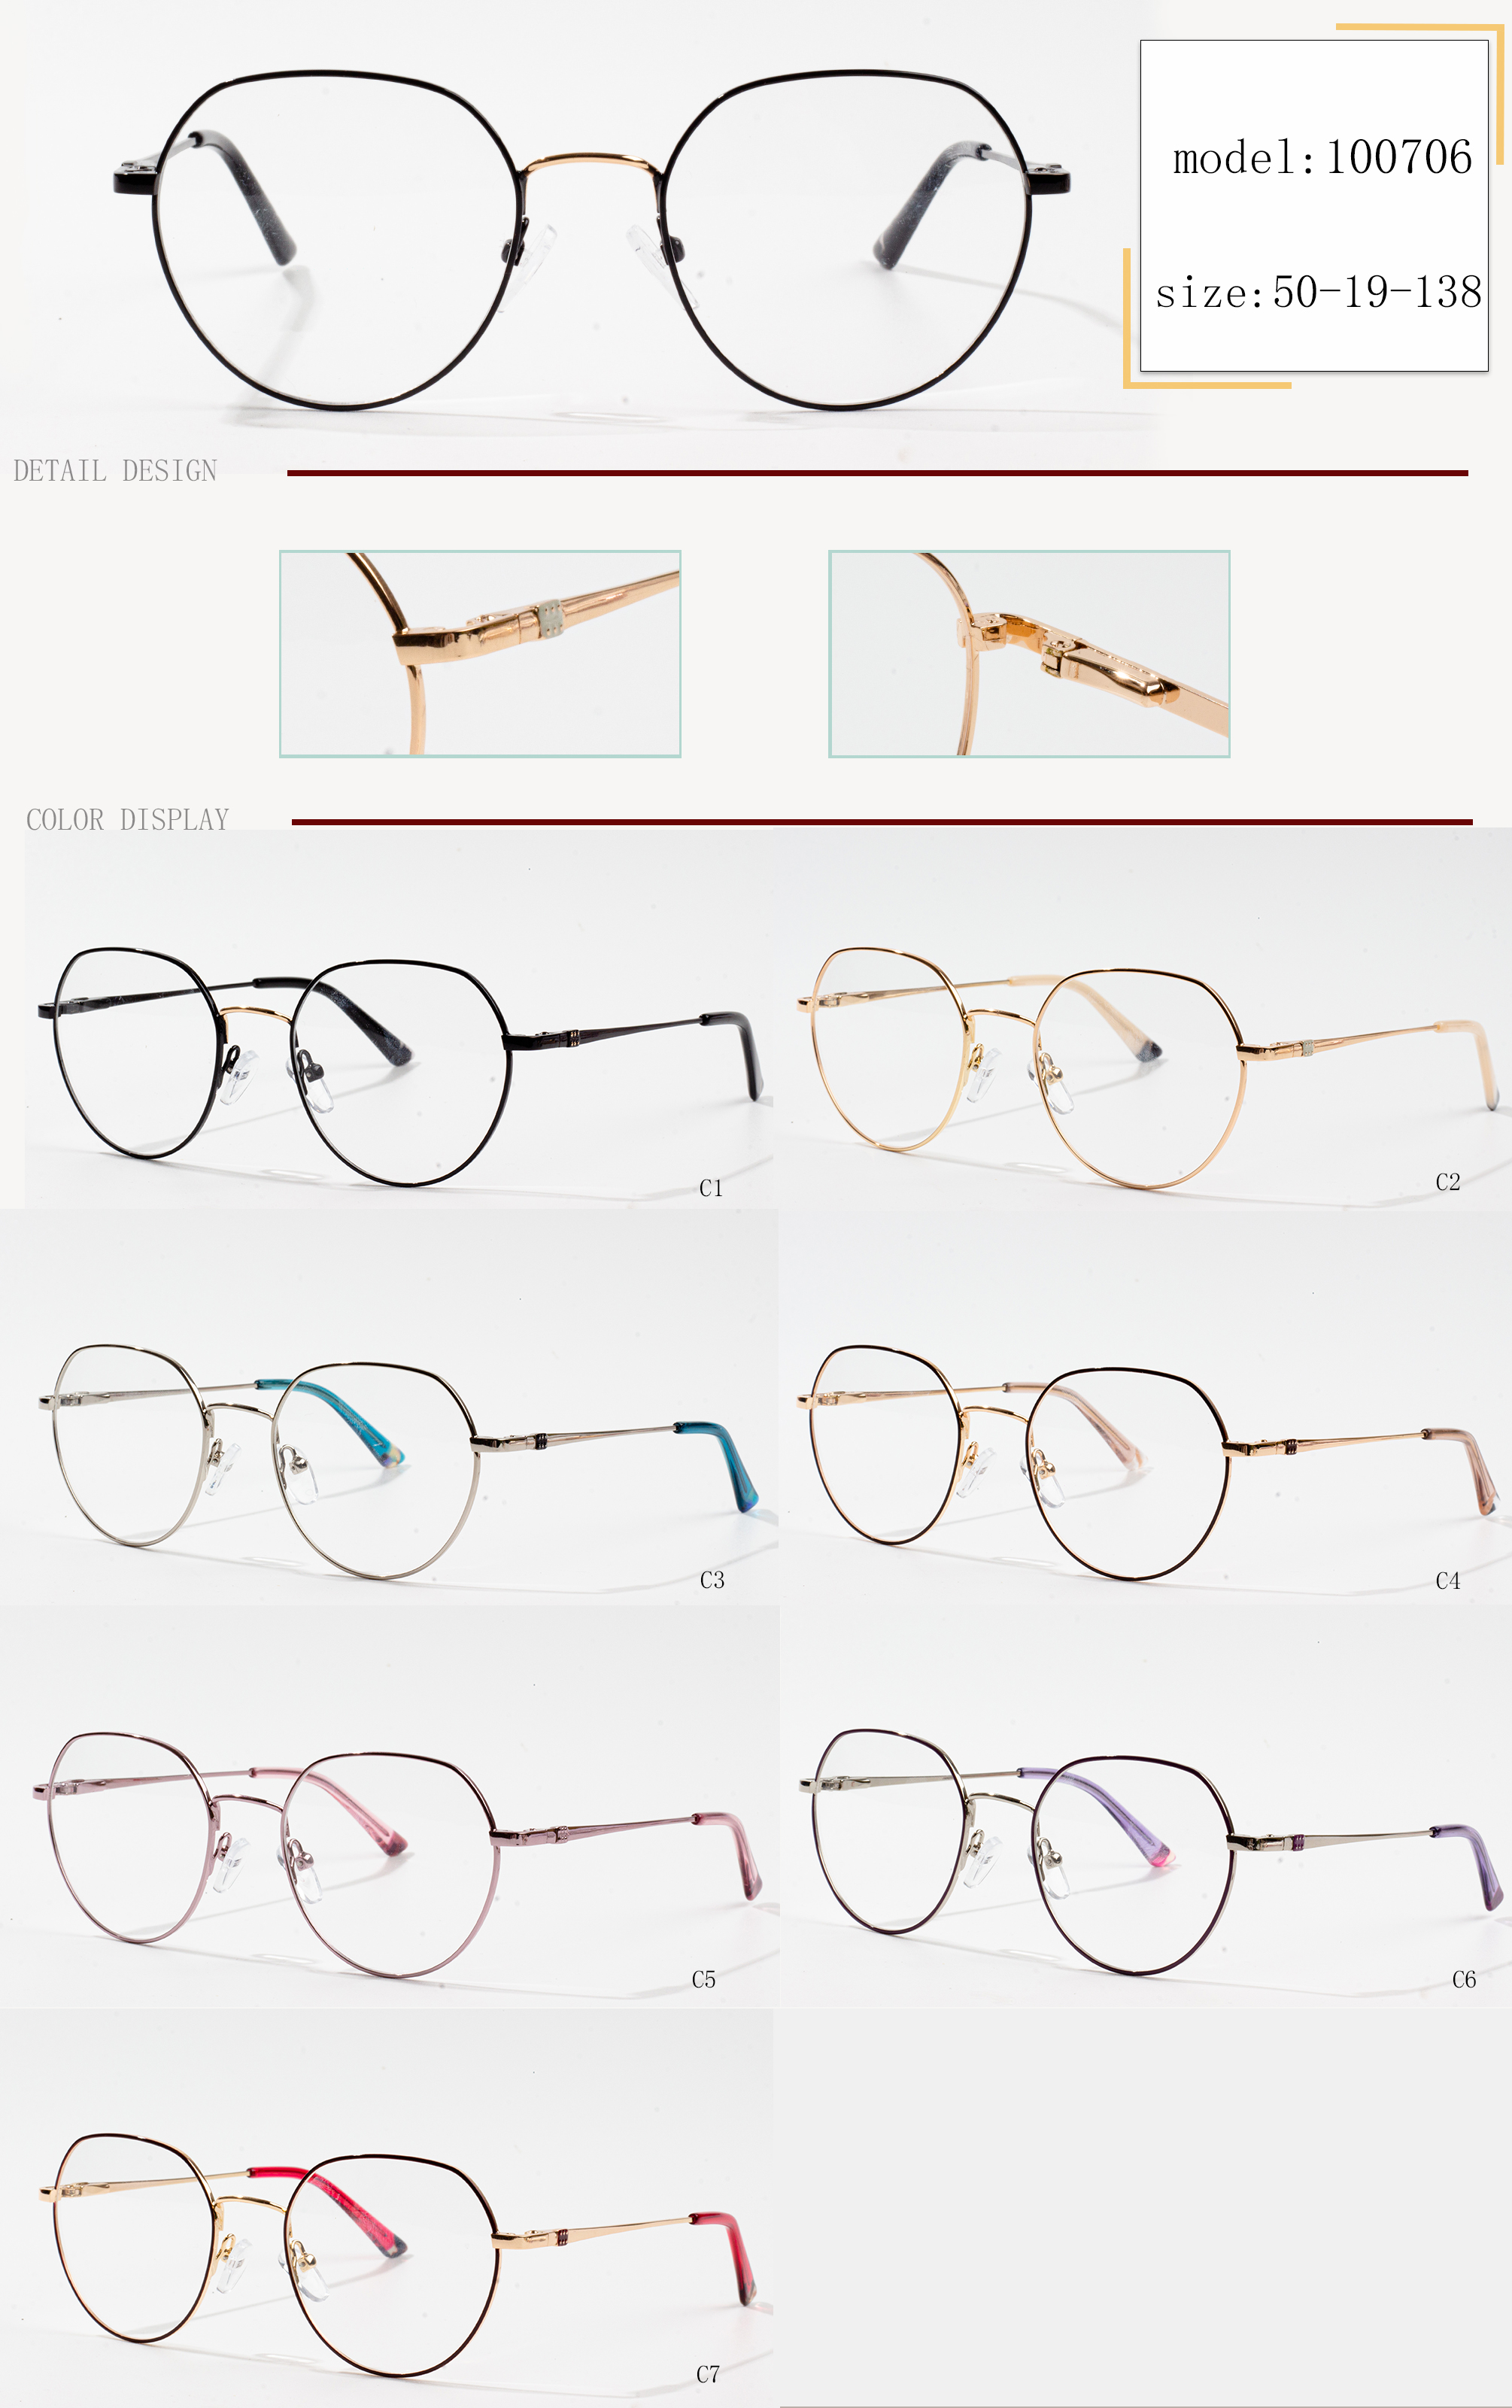 bold eyeglass frames